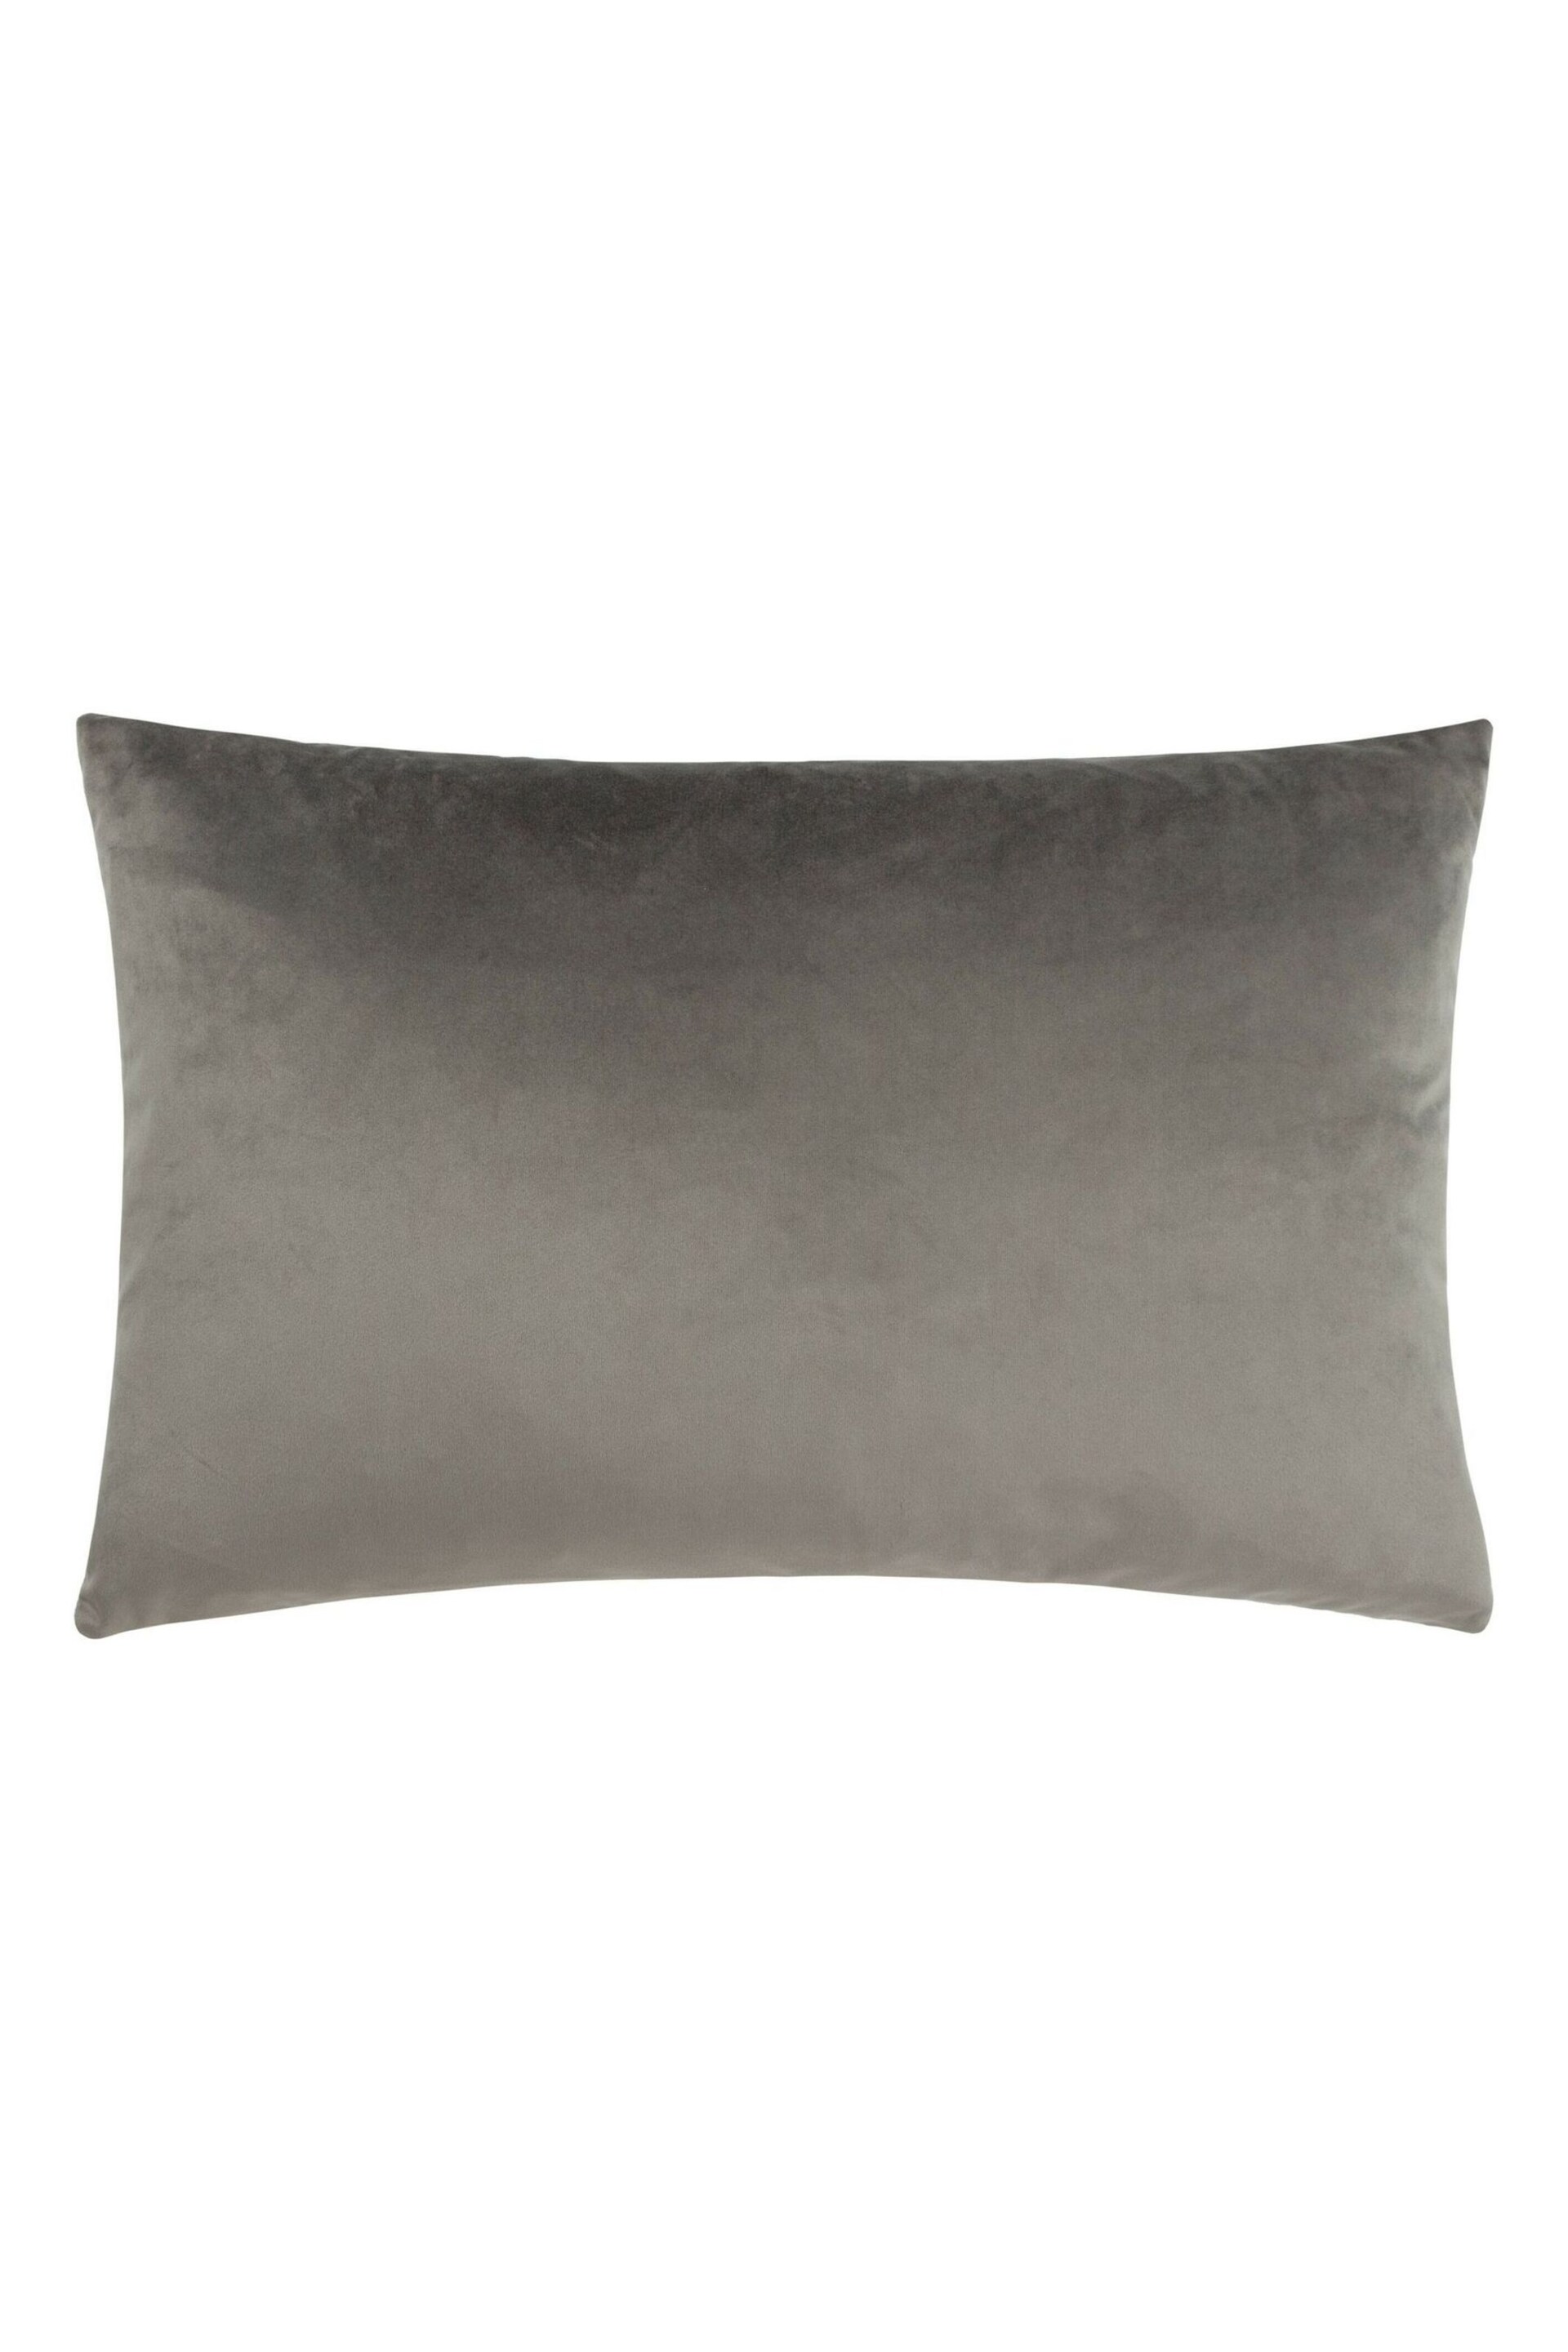 Paoletti Grey Lexington Velvet Jacquard Polyester Filled Cushion - Image 2 of 5